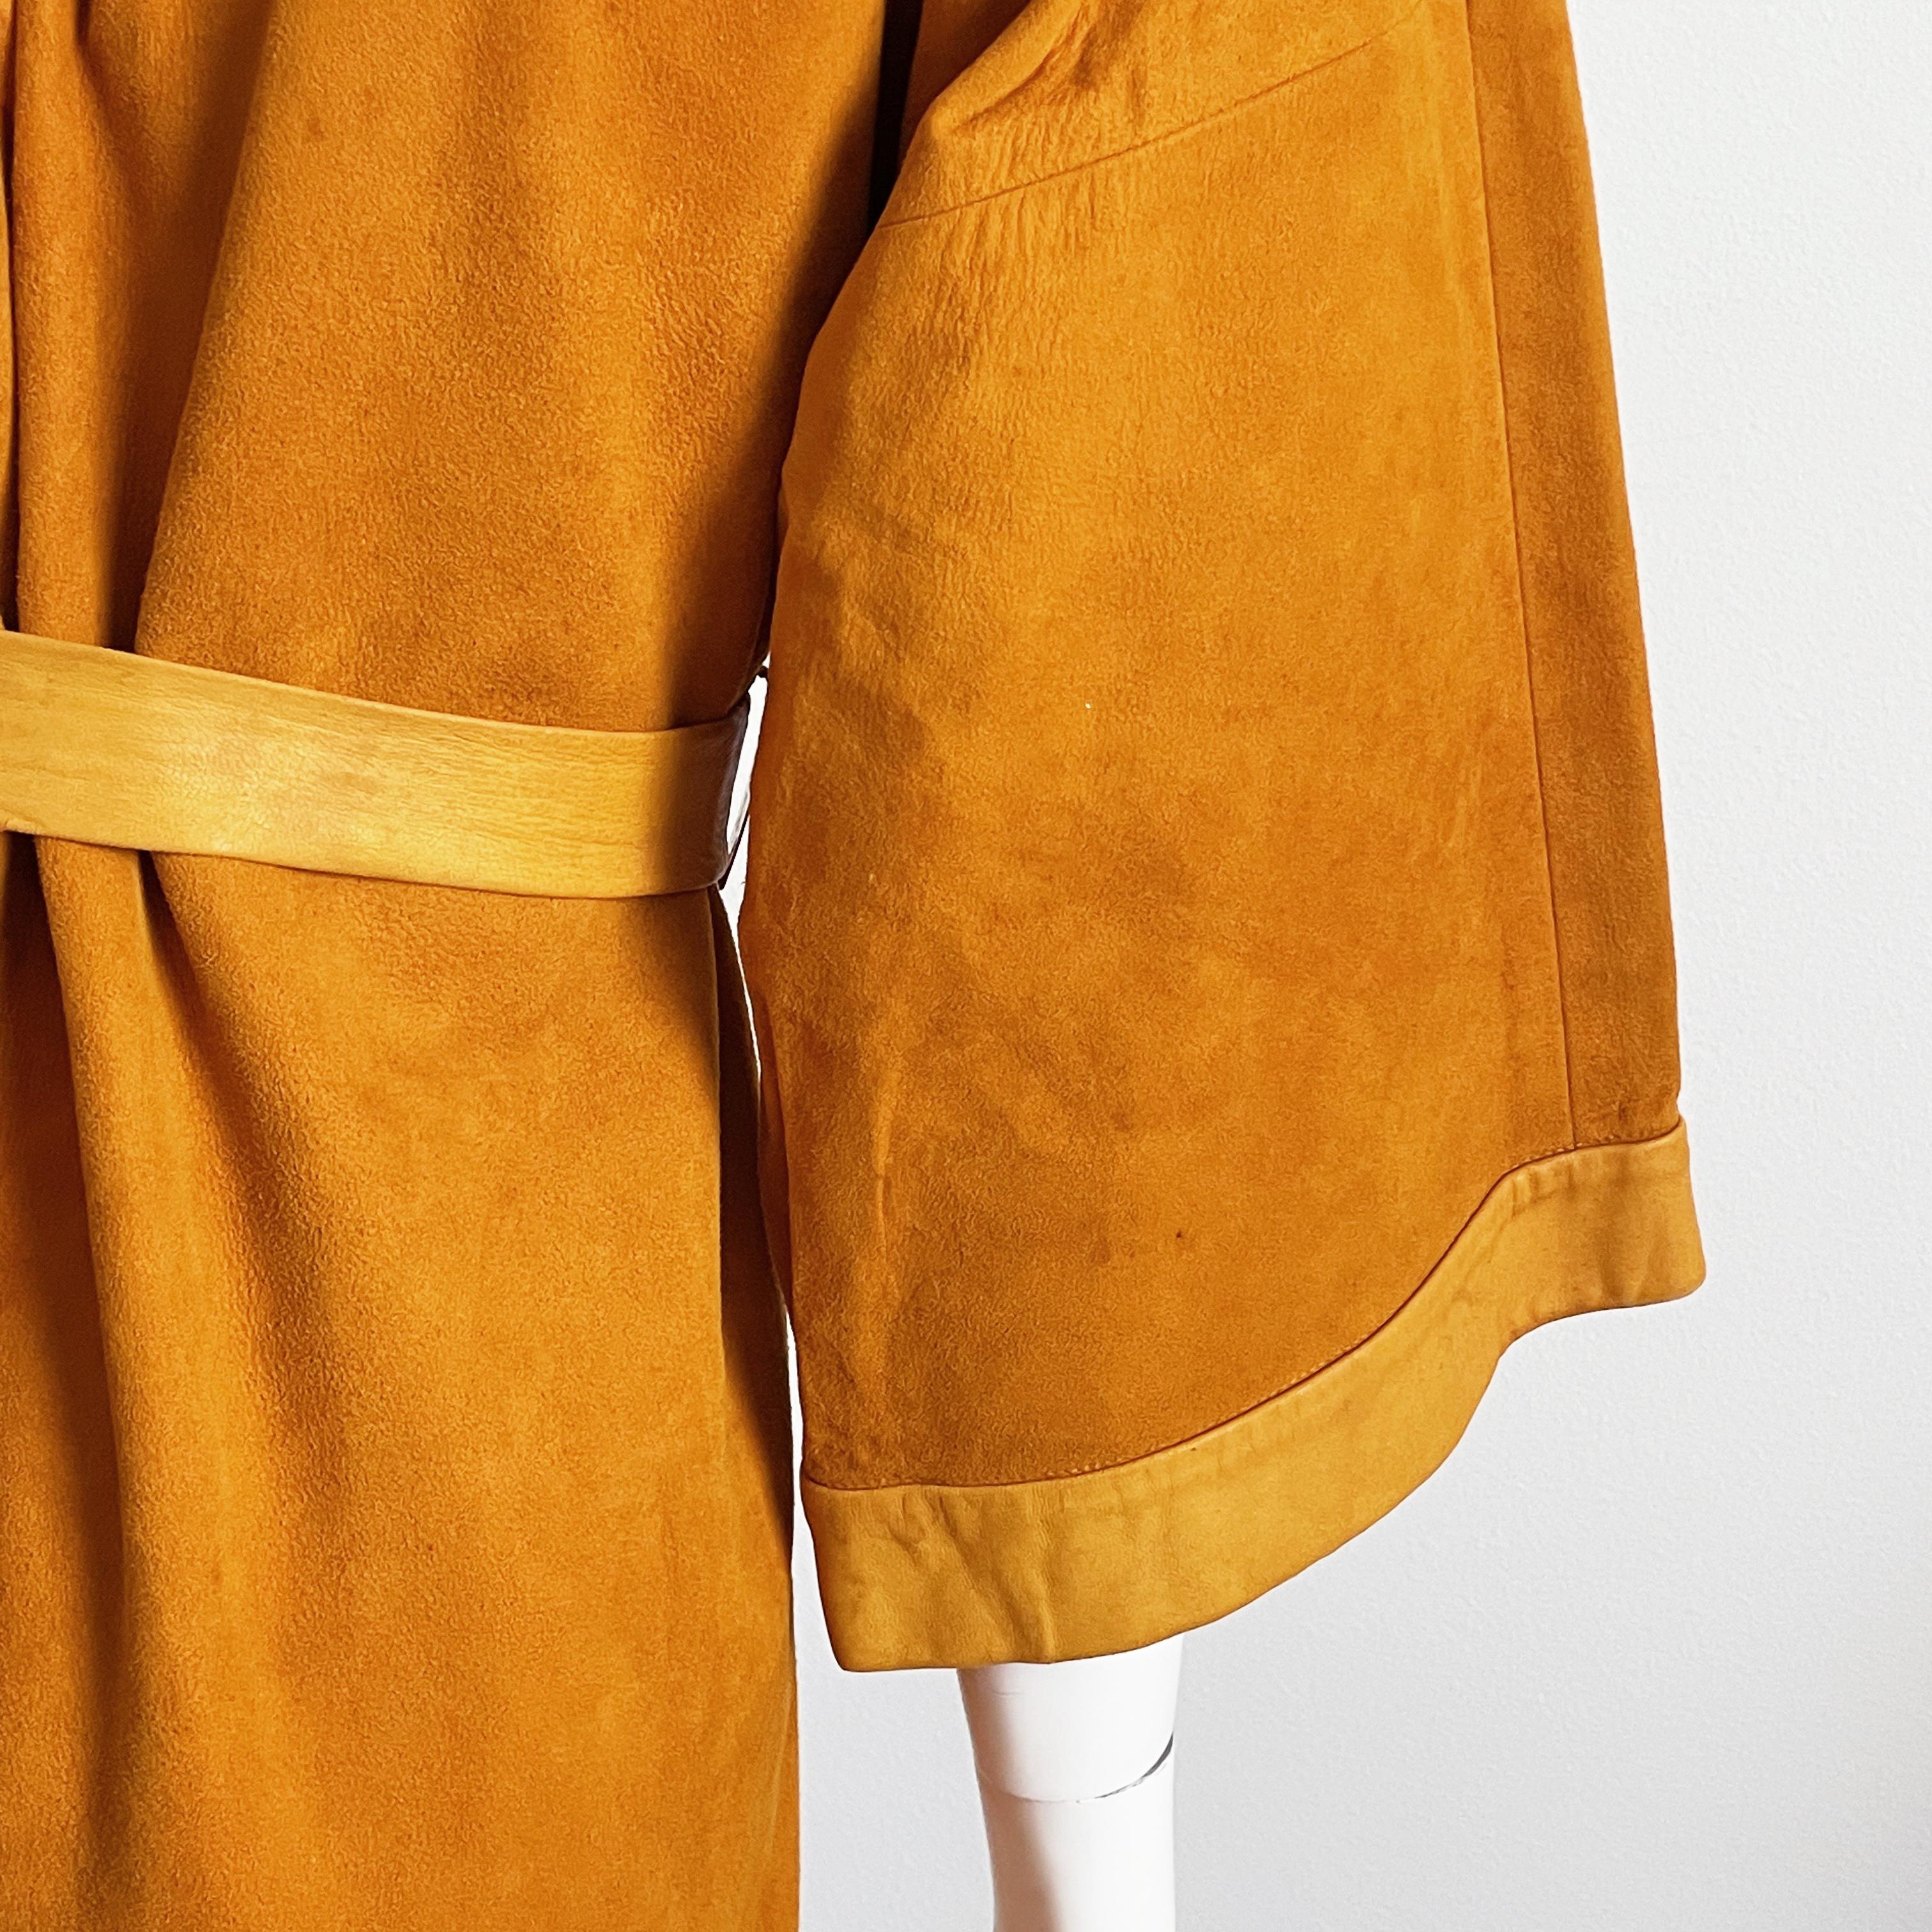 Bonnie Cashin for Sills Jacket Pumpkin Suede Leather Kimono Style Rare S/M 4